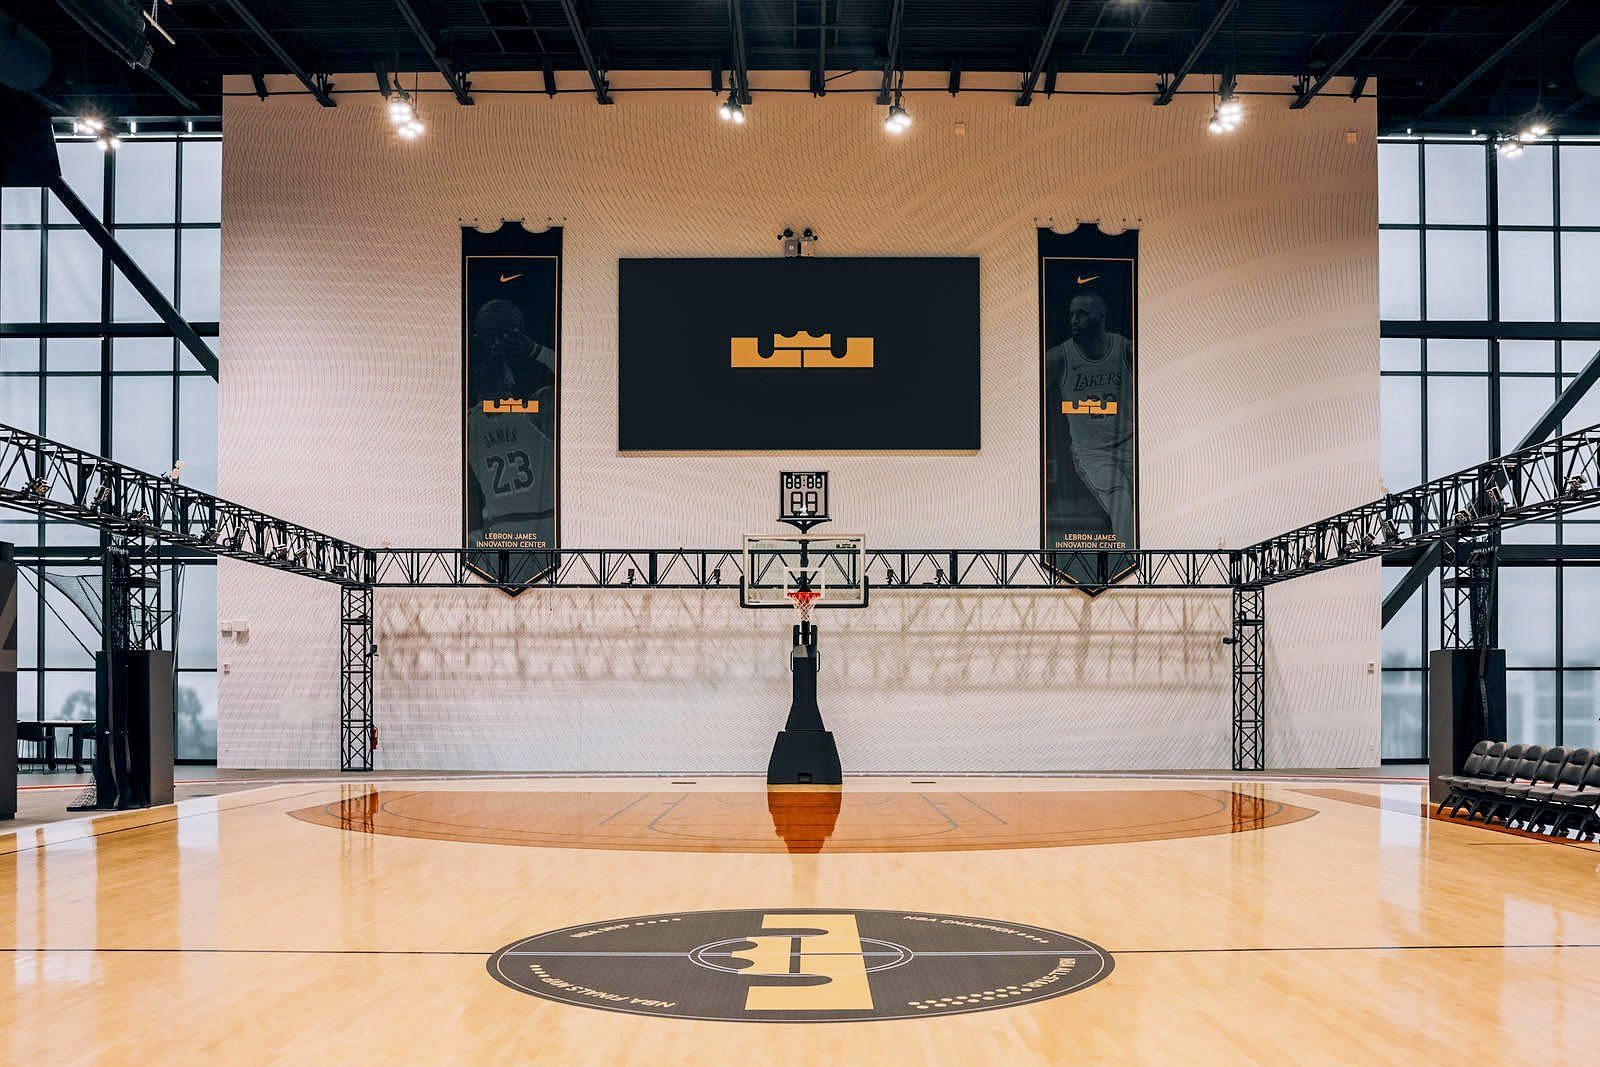 LeBron James Innovation Center features a basketball court (Image via Nike)